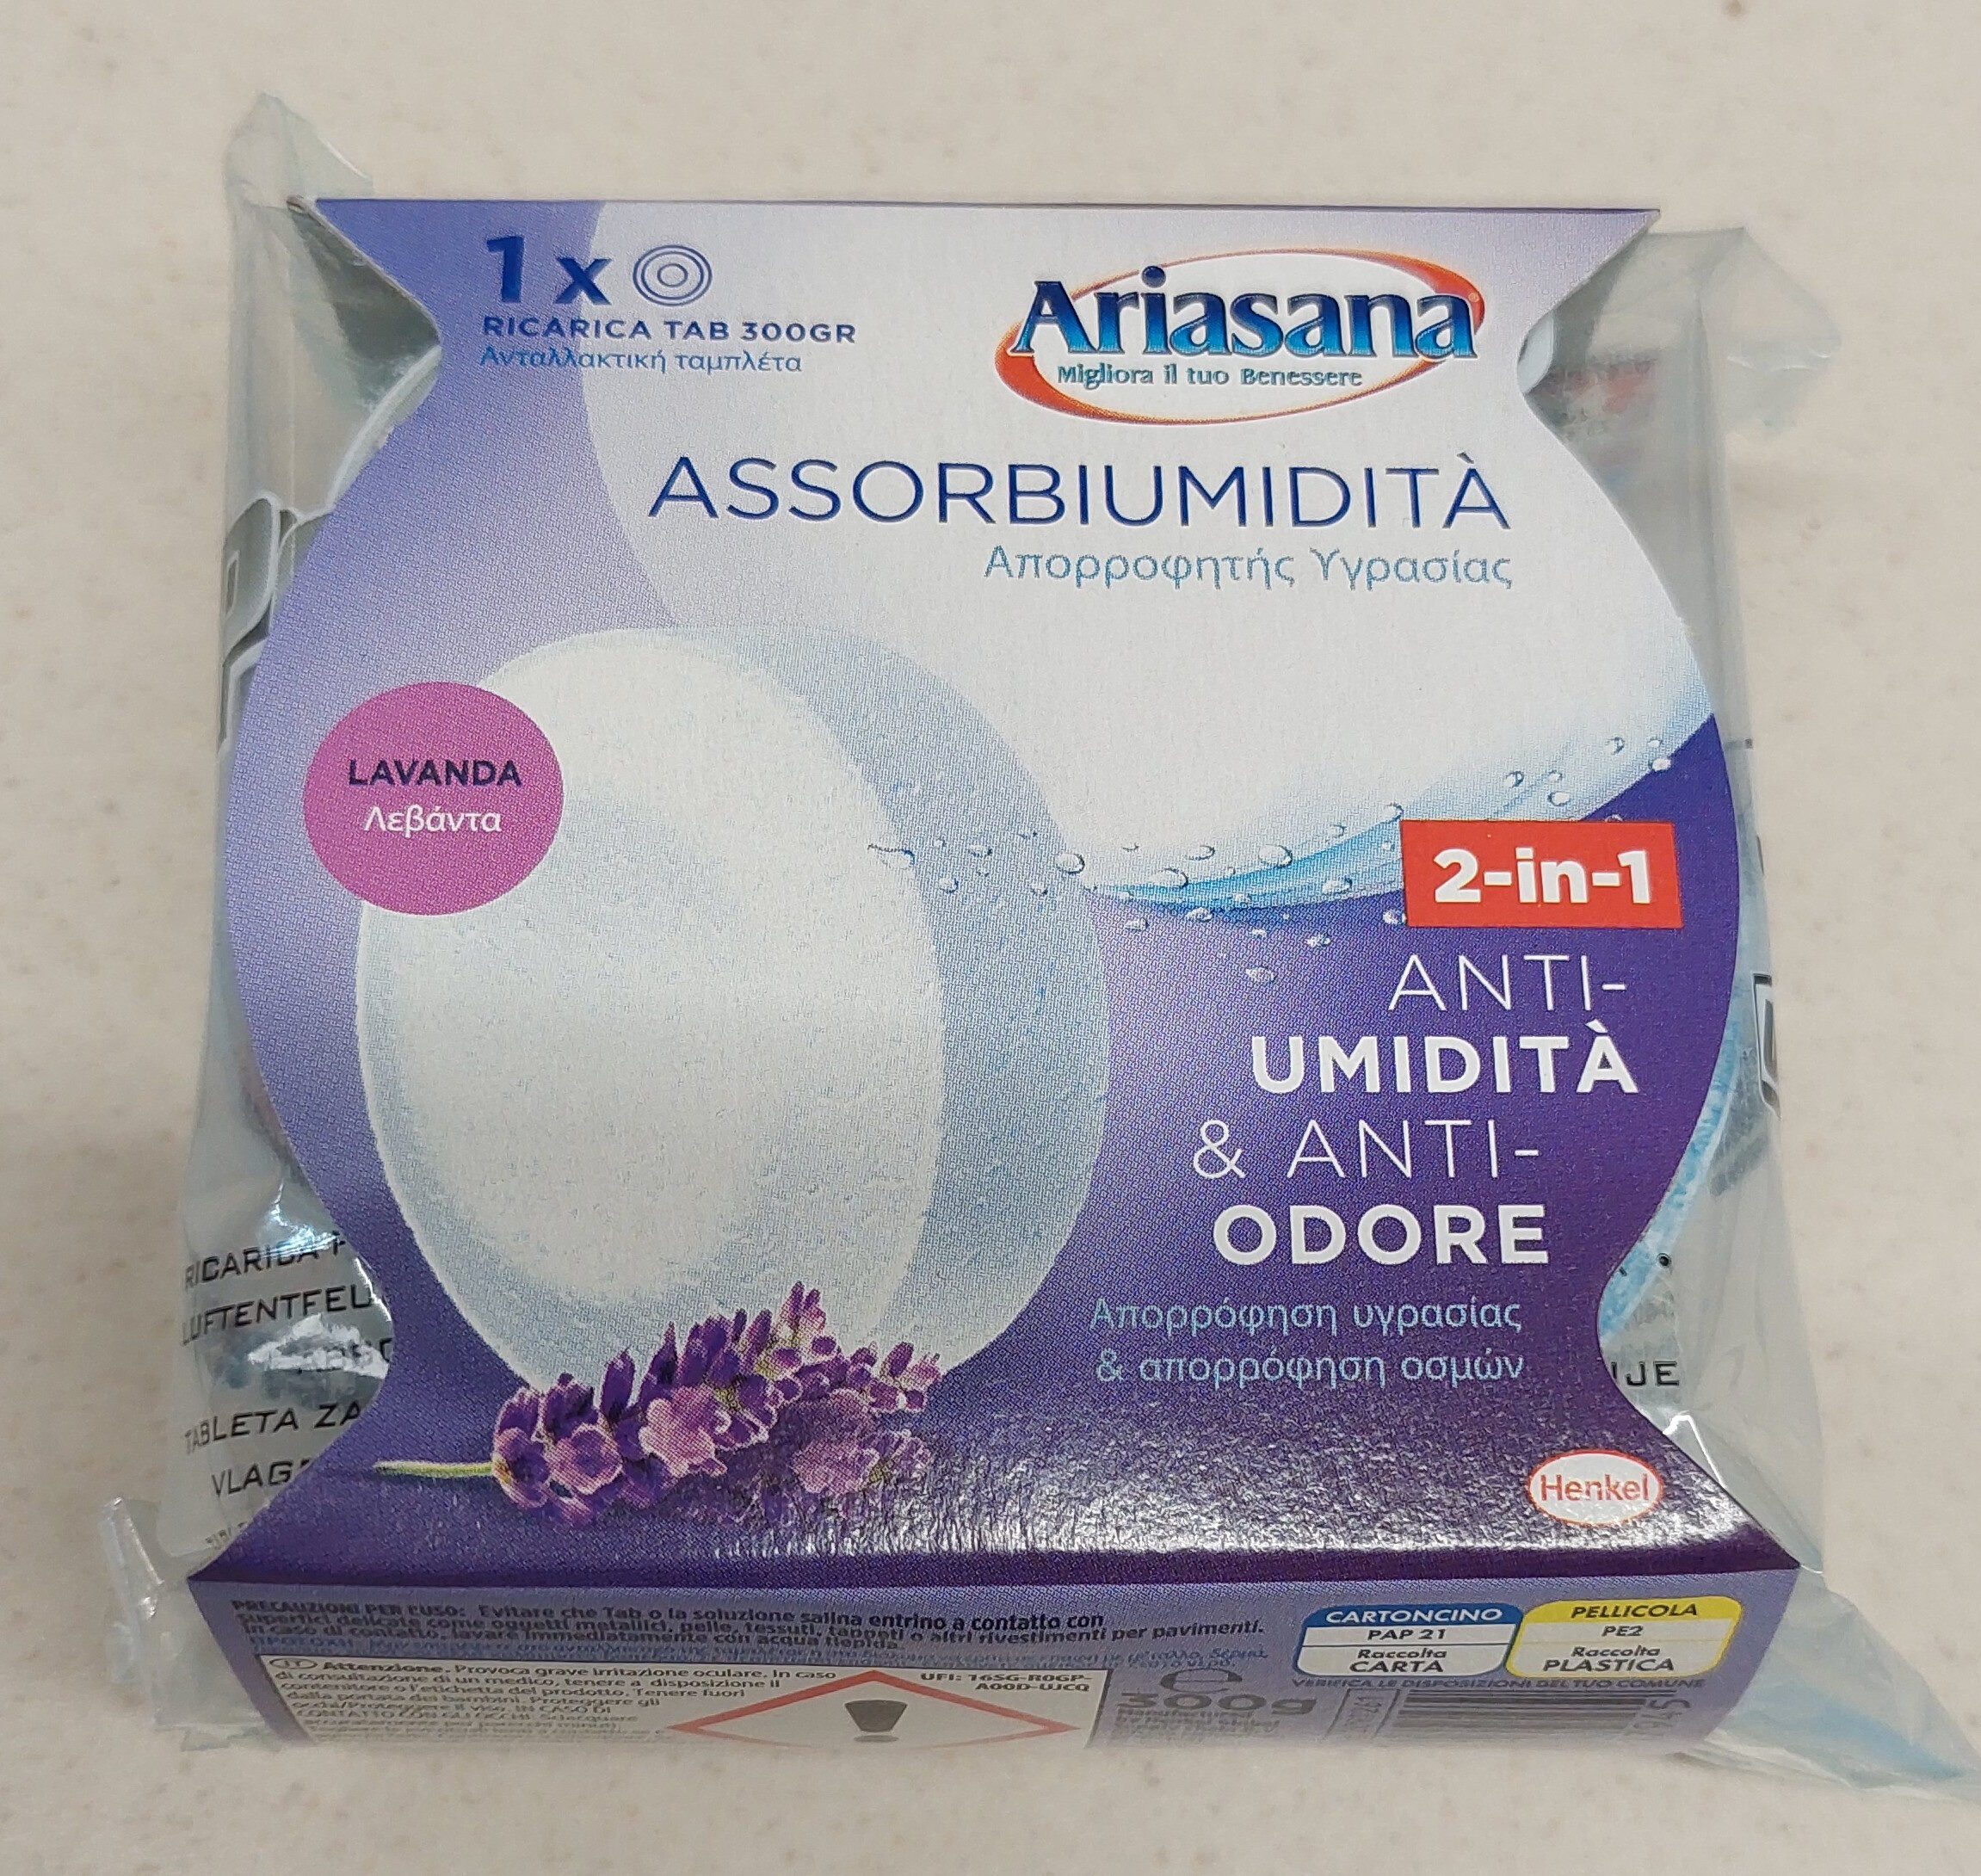 Ariasana assorbi umidità - Product - it